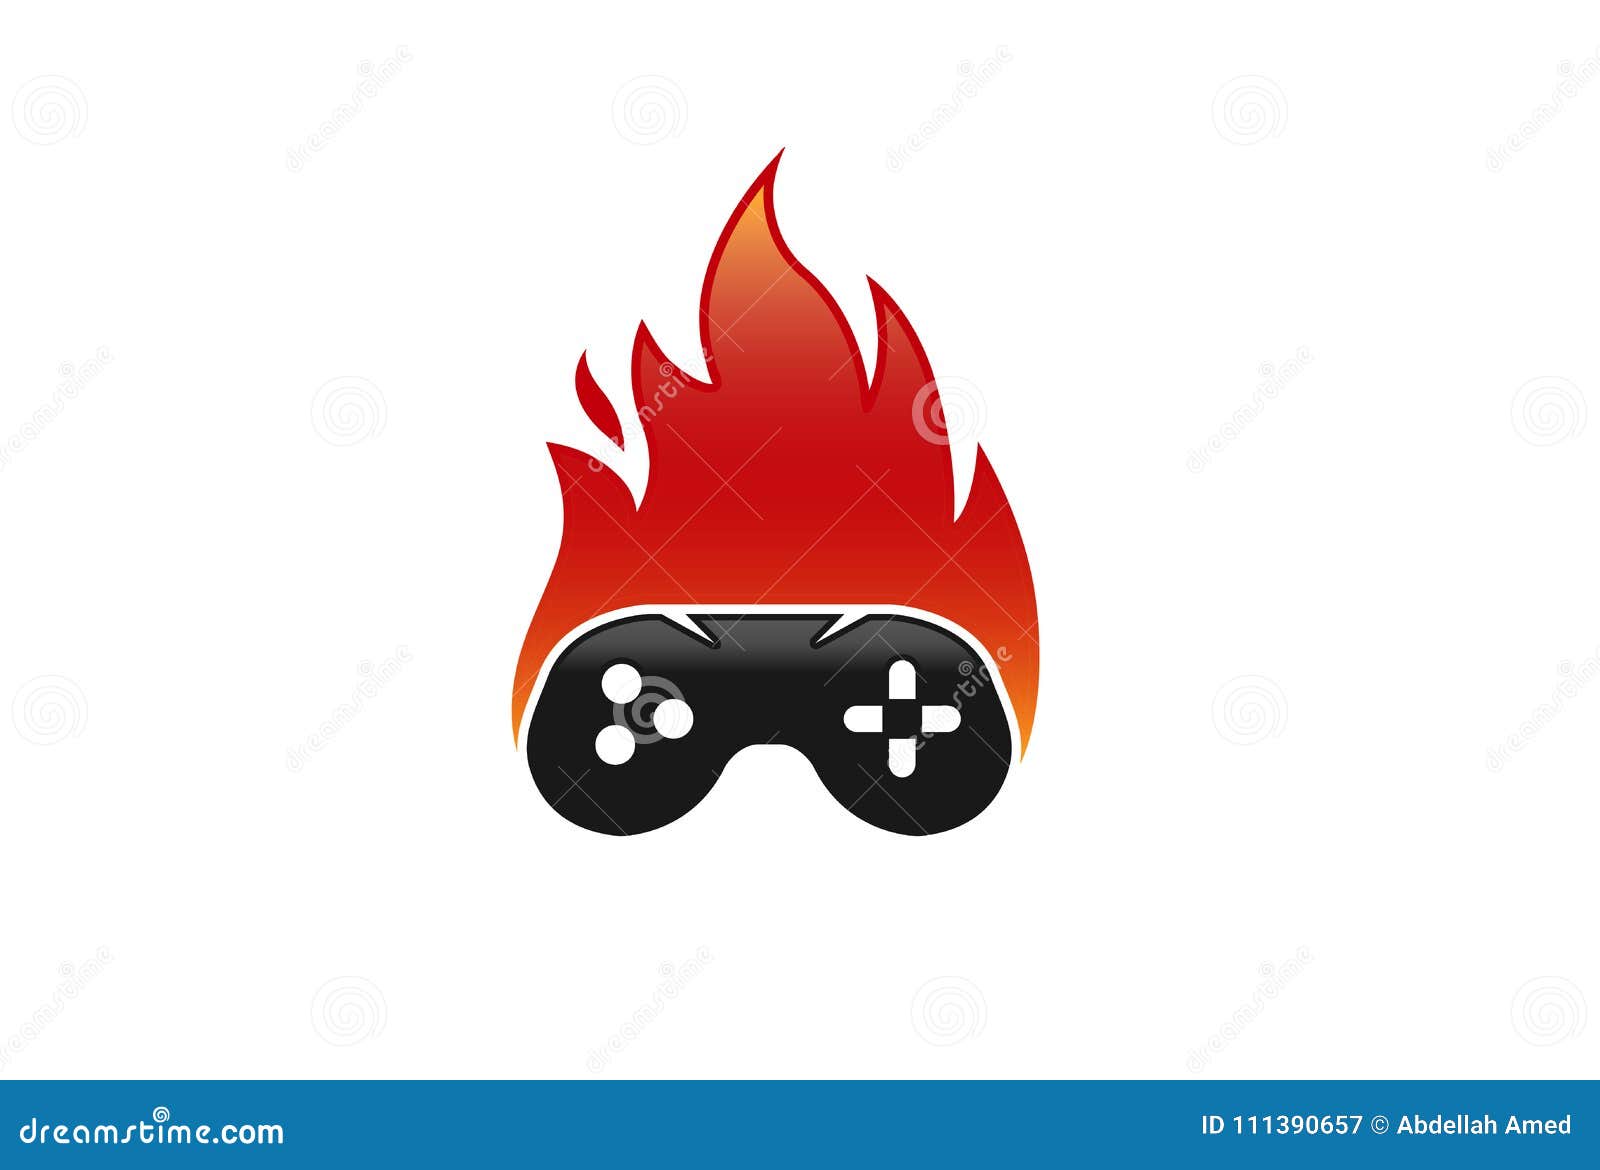 Hot Game Logo Design Stock Vector Illustration Of Vector